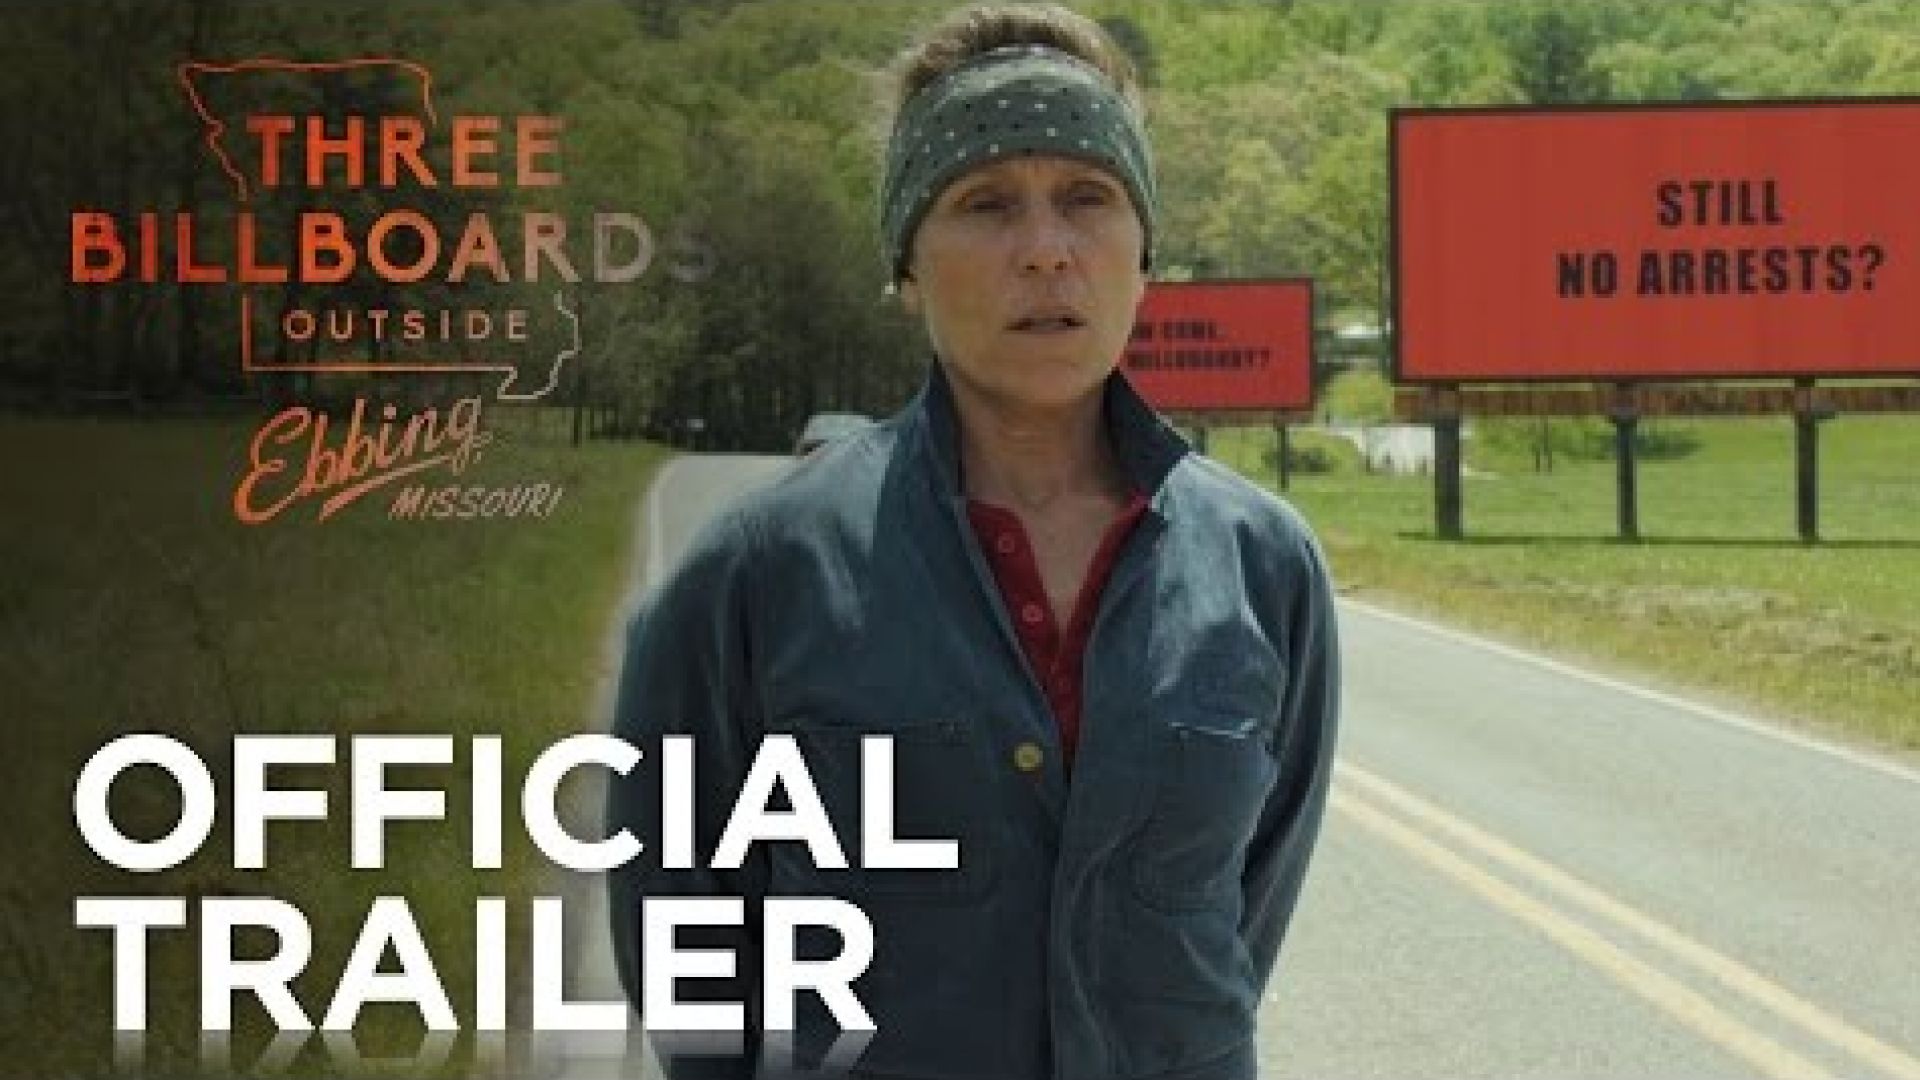 'Three Billboards Outside Ebbing, Missouri' trailer